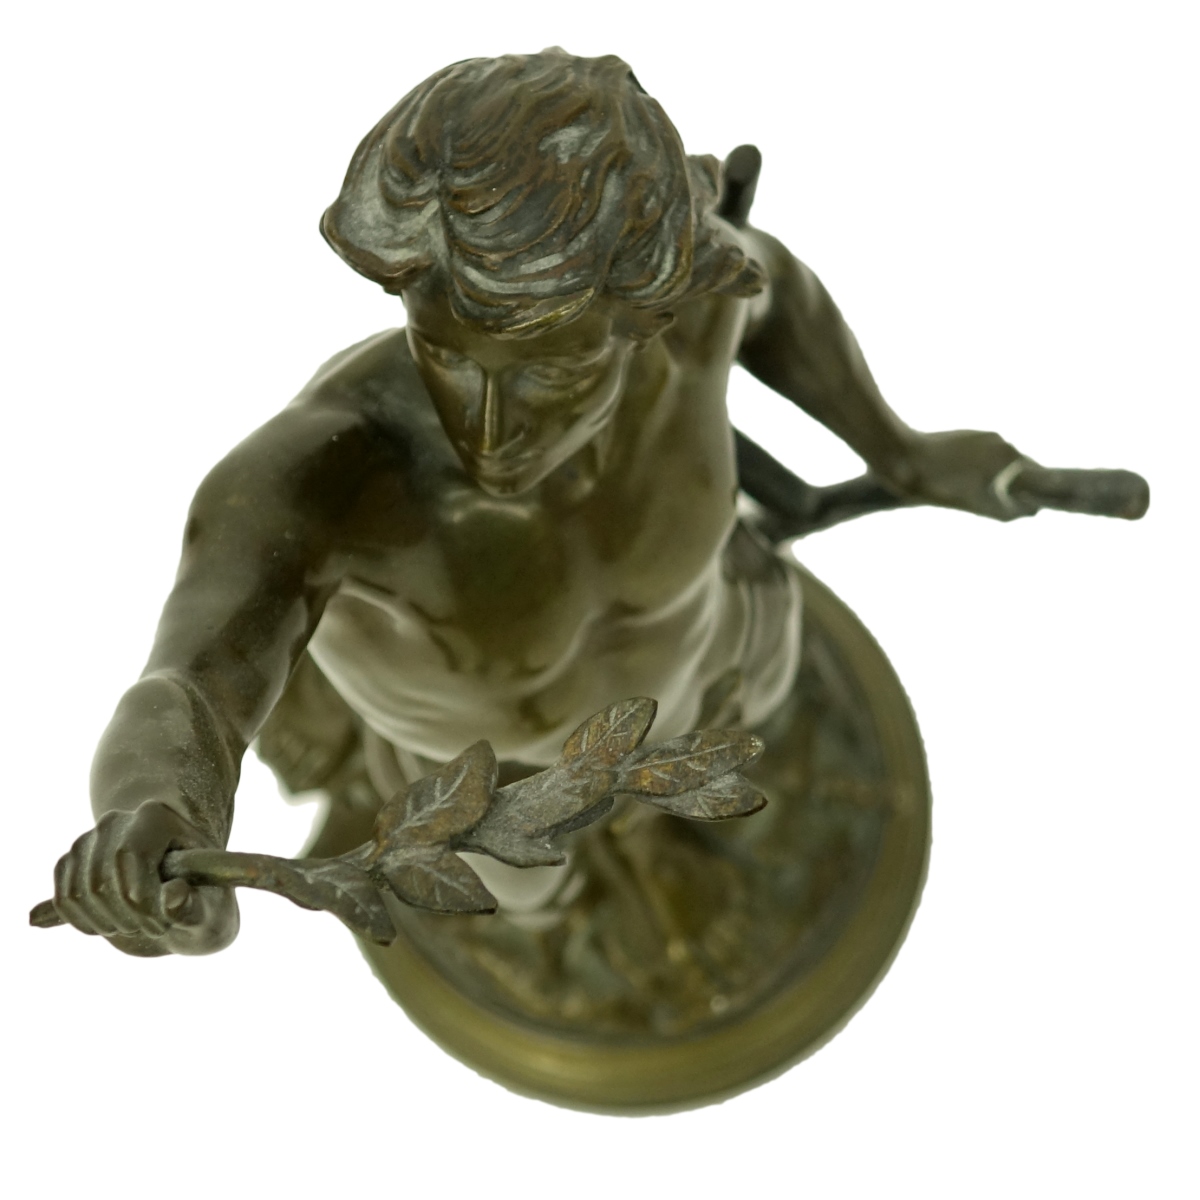 Edouard Drouot, French (1859 - 1945) Bronze